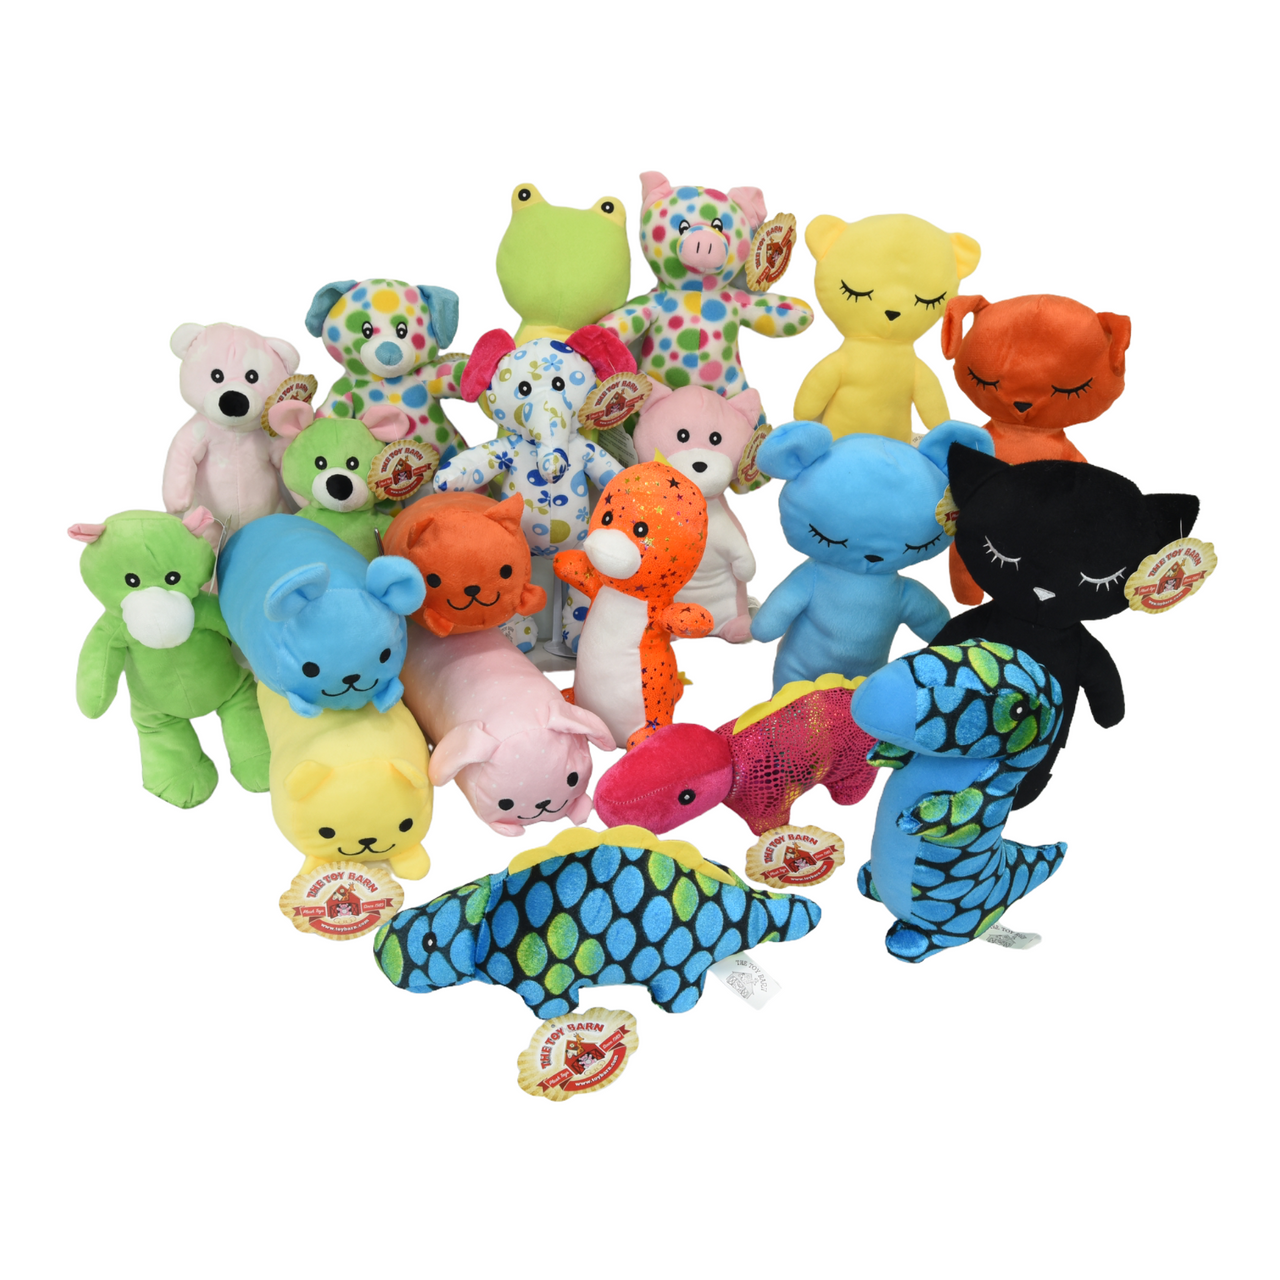 Mini Stuffed Animals & Plush Toys